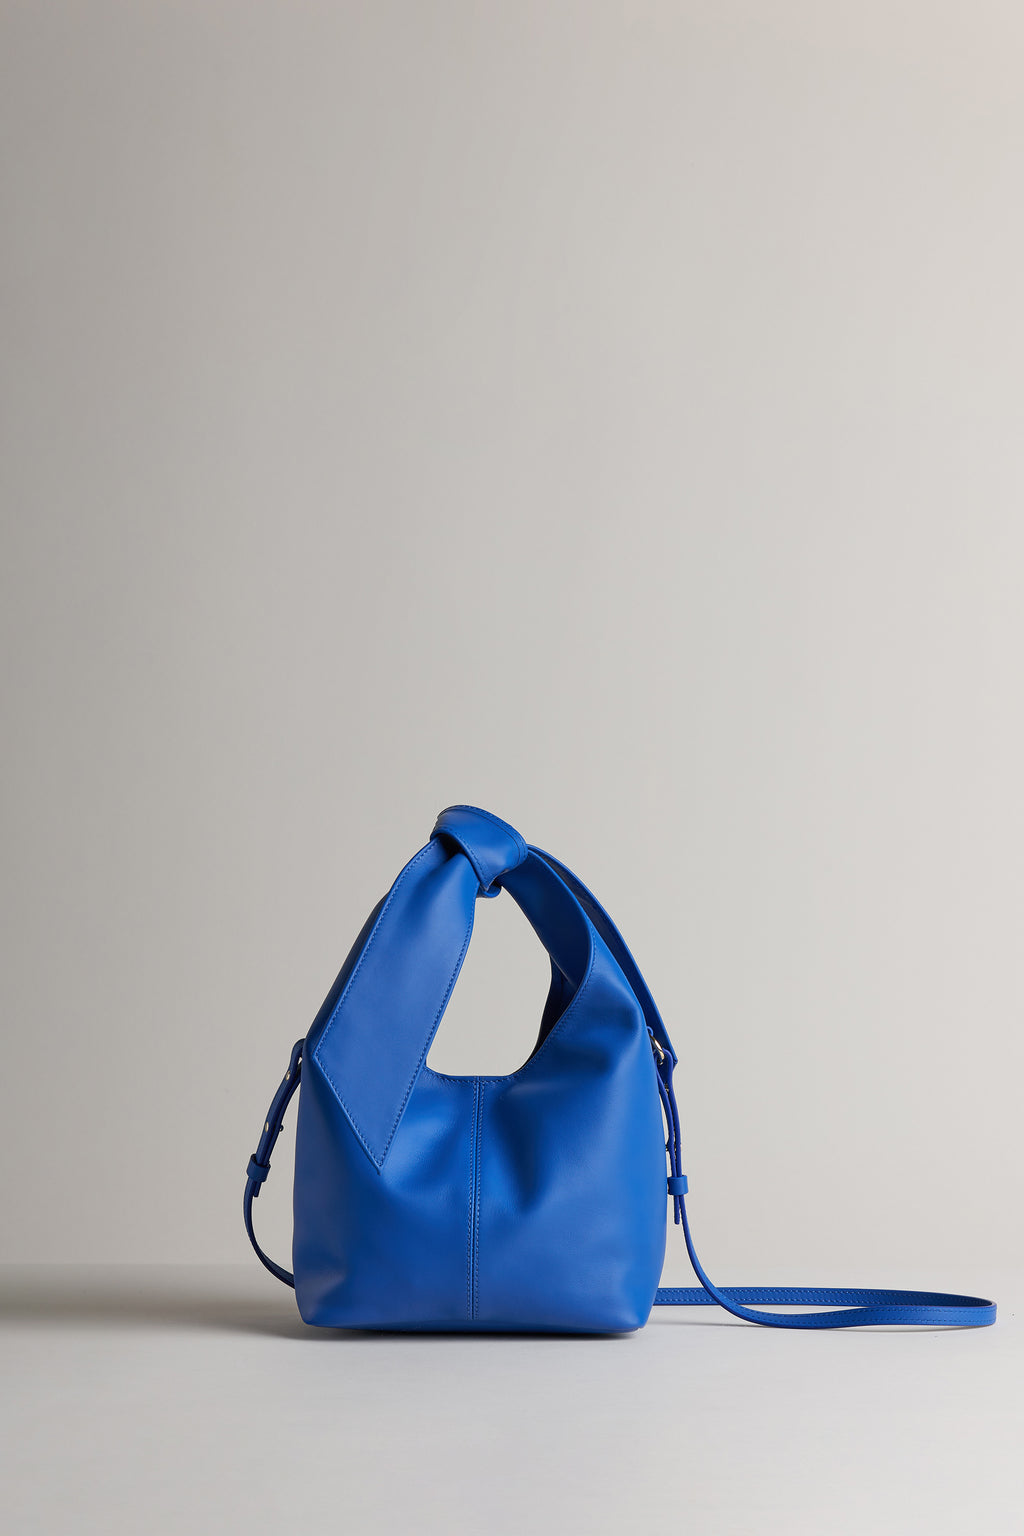 Banana Bag in Neutral Blue Leather Zipper. Adjustable 